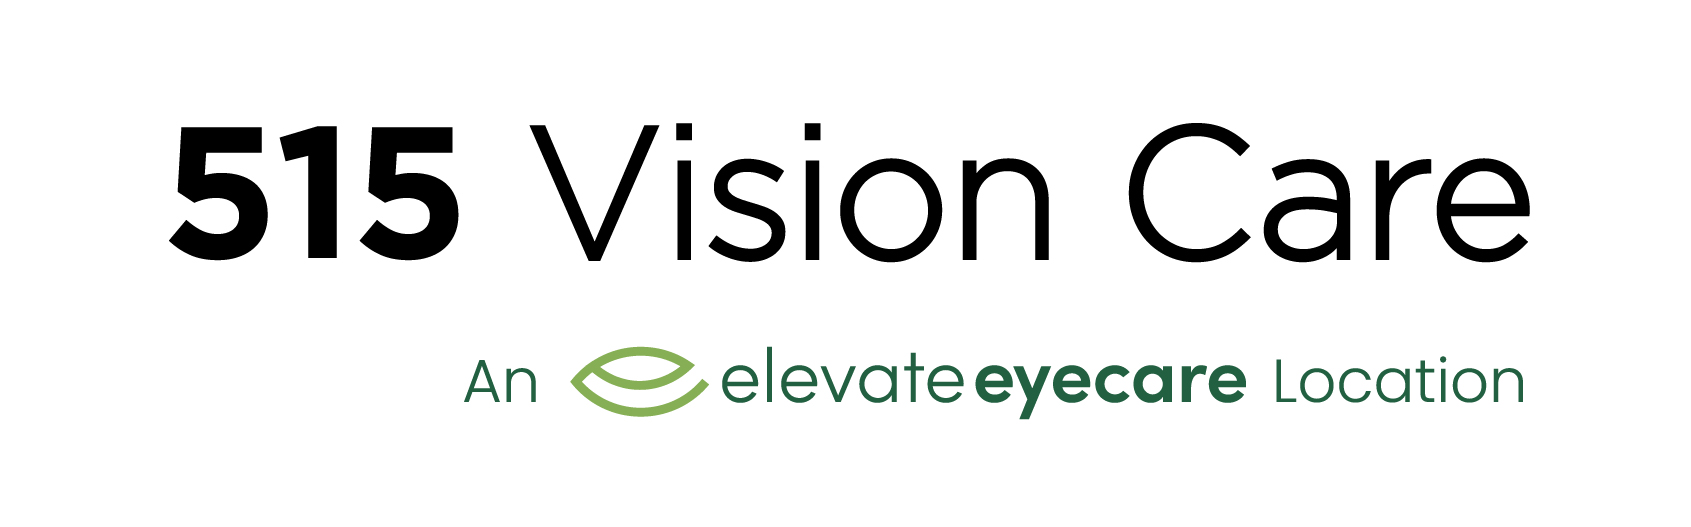 515 Vision Care Logo